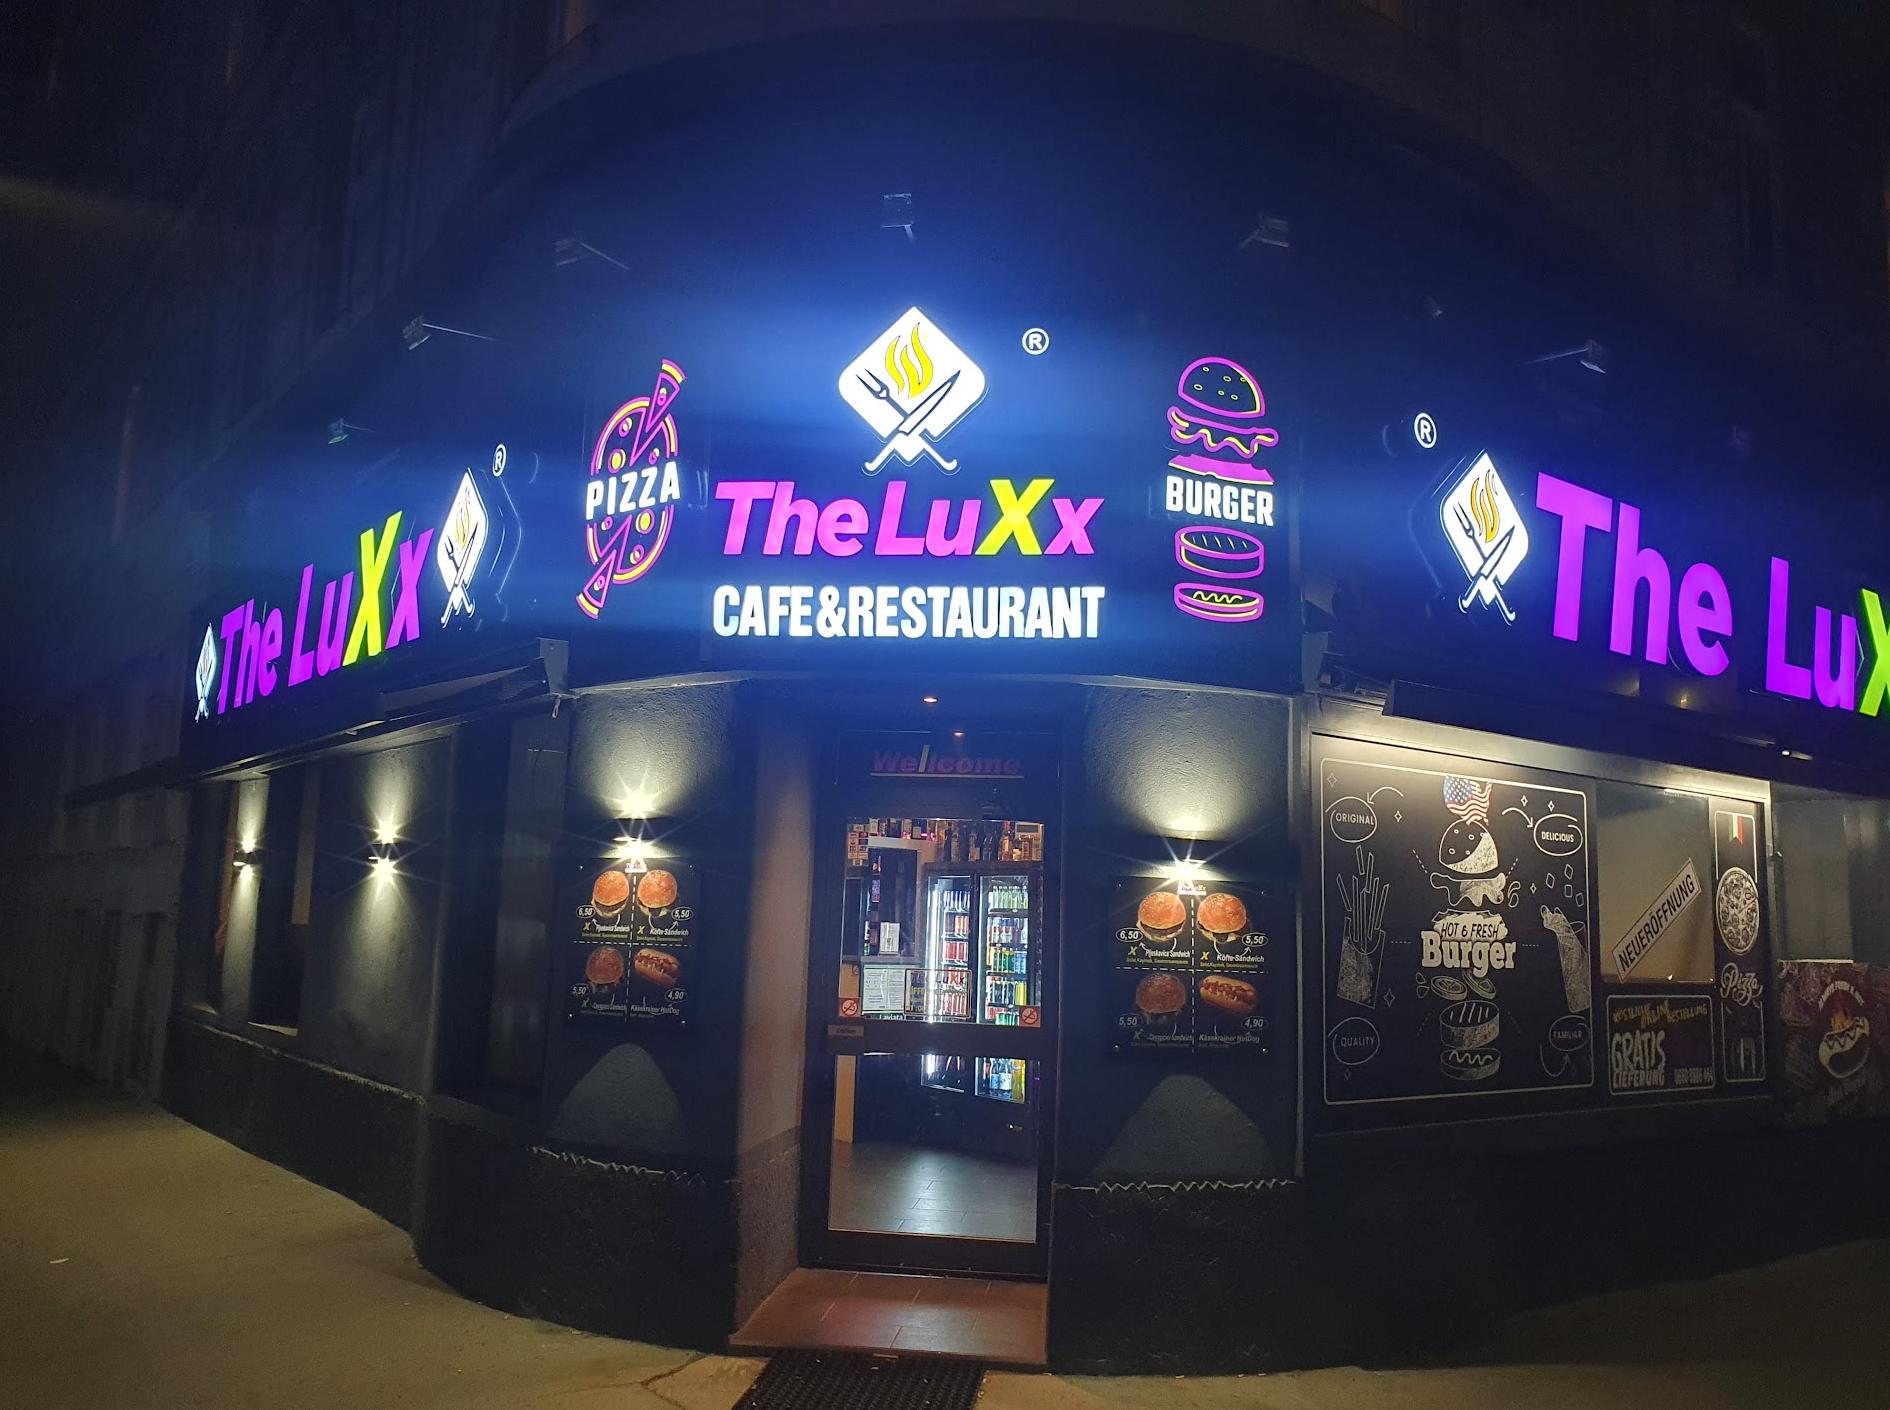 The Luxx